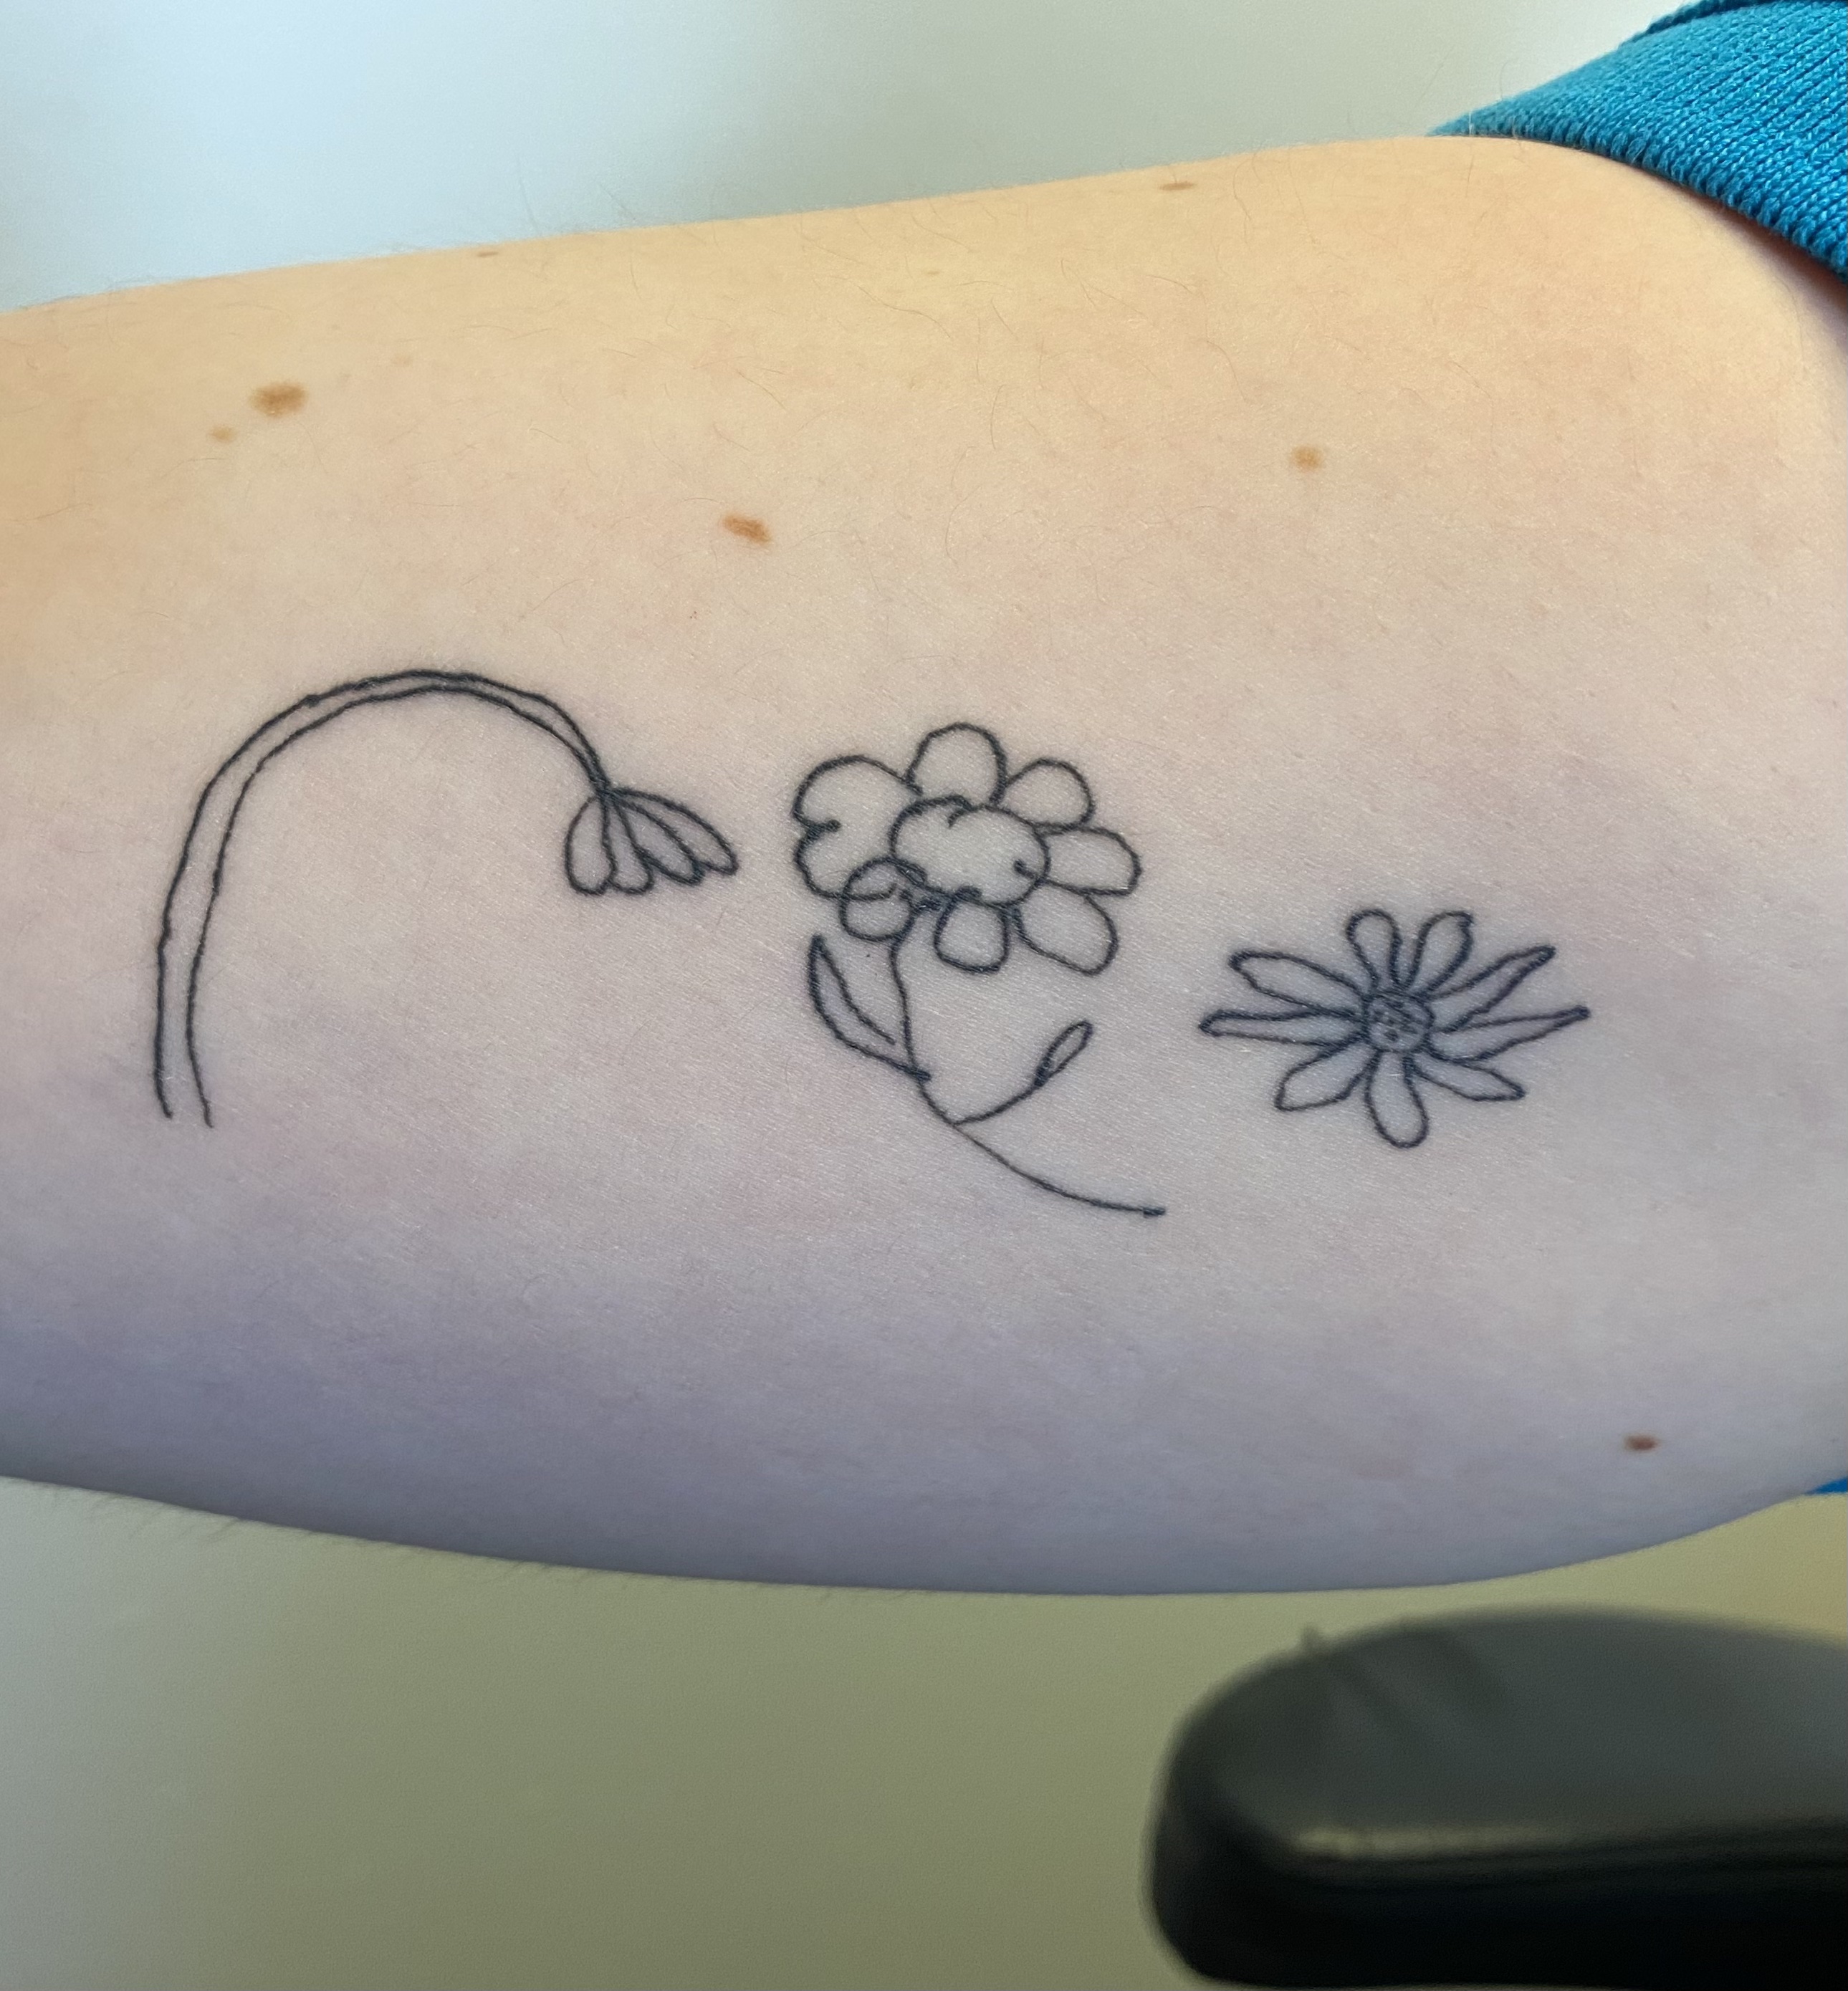 Charlotte's Tattoo Blog Post